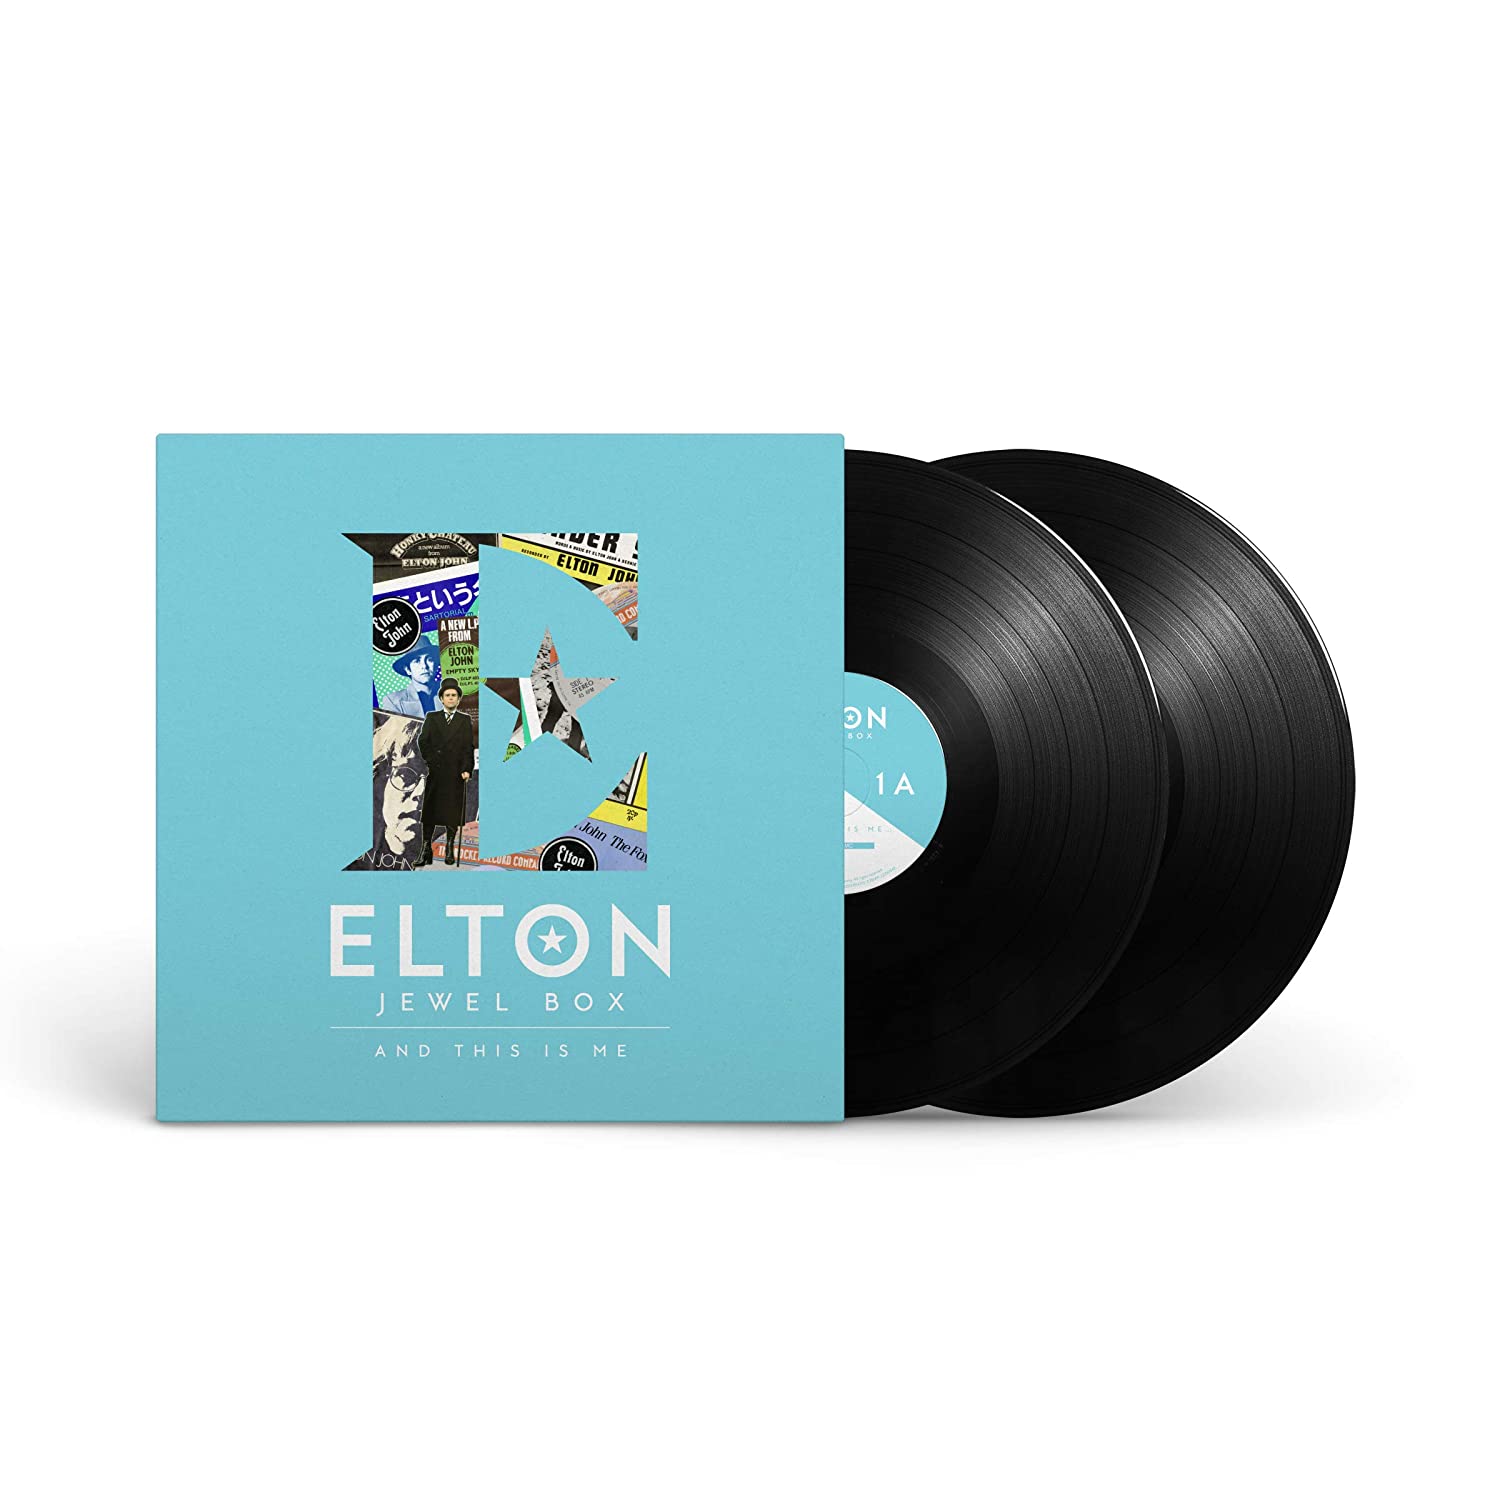 Elton John – Jewel Box (And This Is Me 2LP)